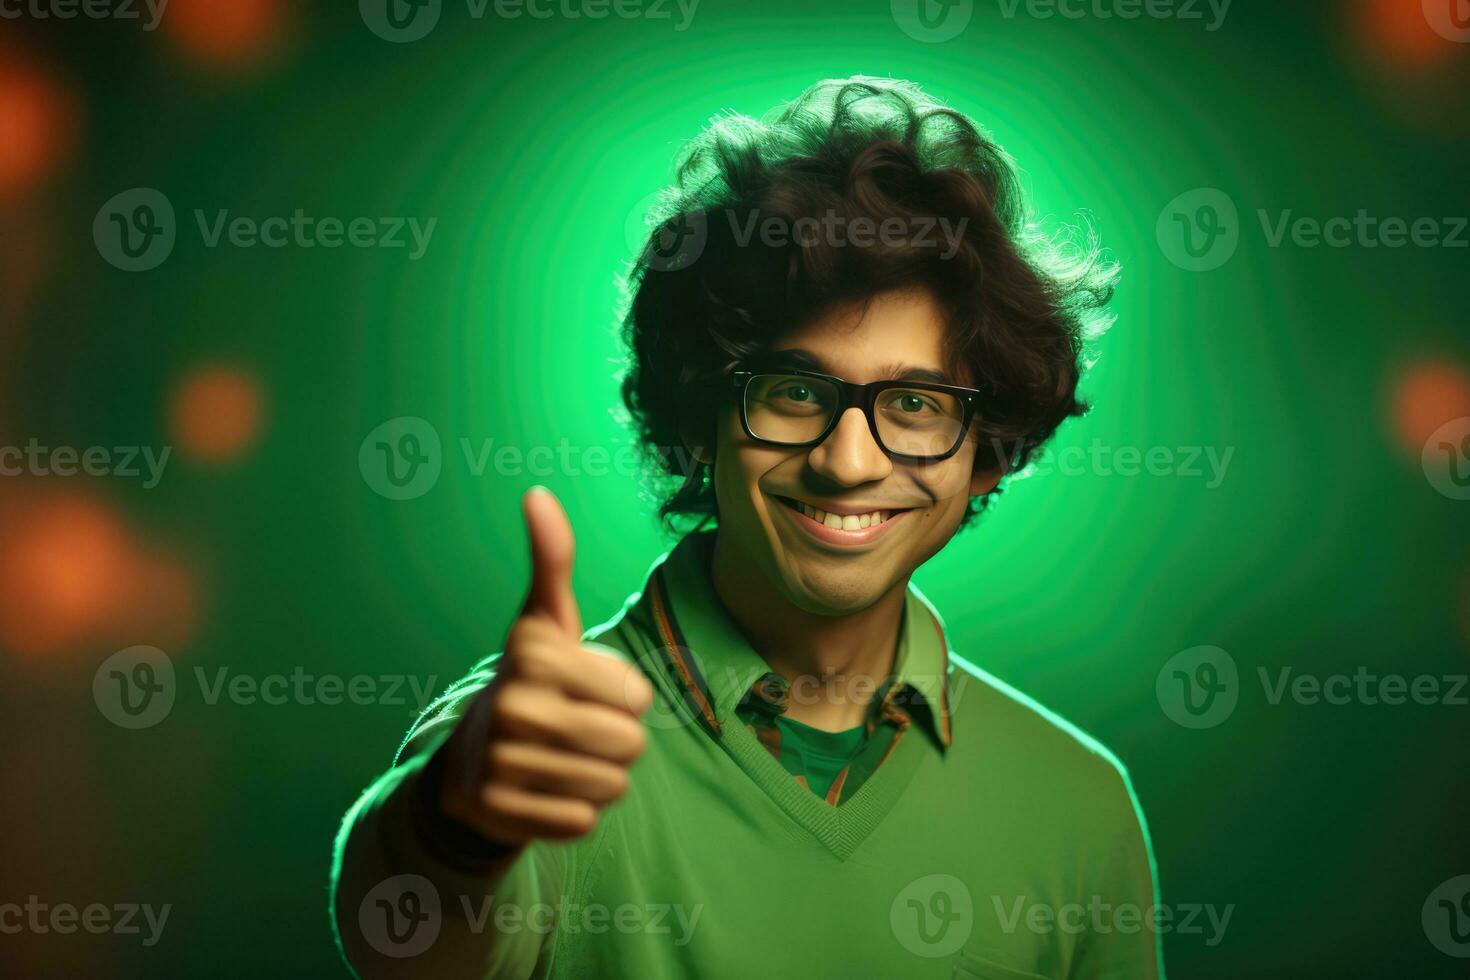 ai genererad en man ger en tummen upp gest i en ljus grön rum. foto